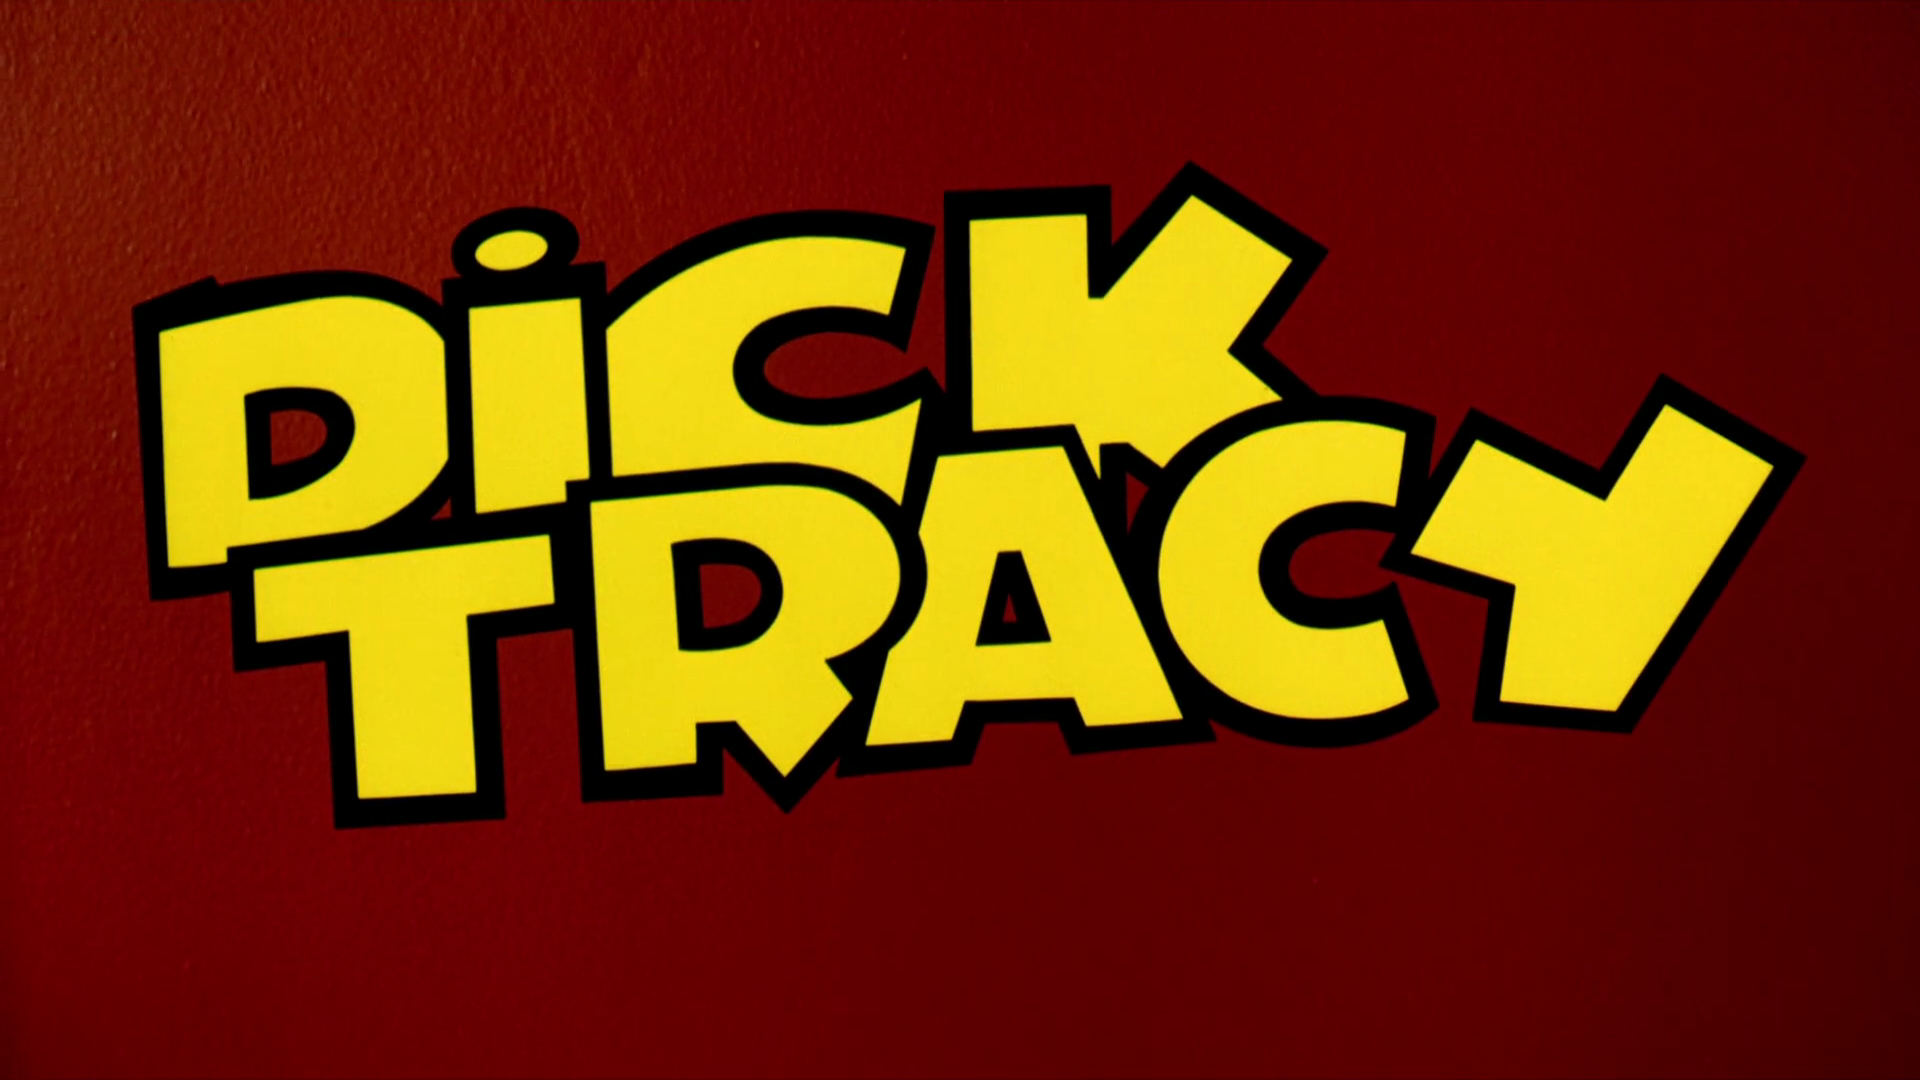 Dick name. Логотипы dick Tracy.